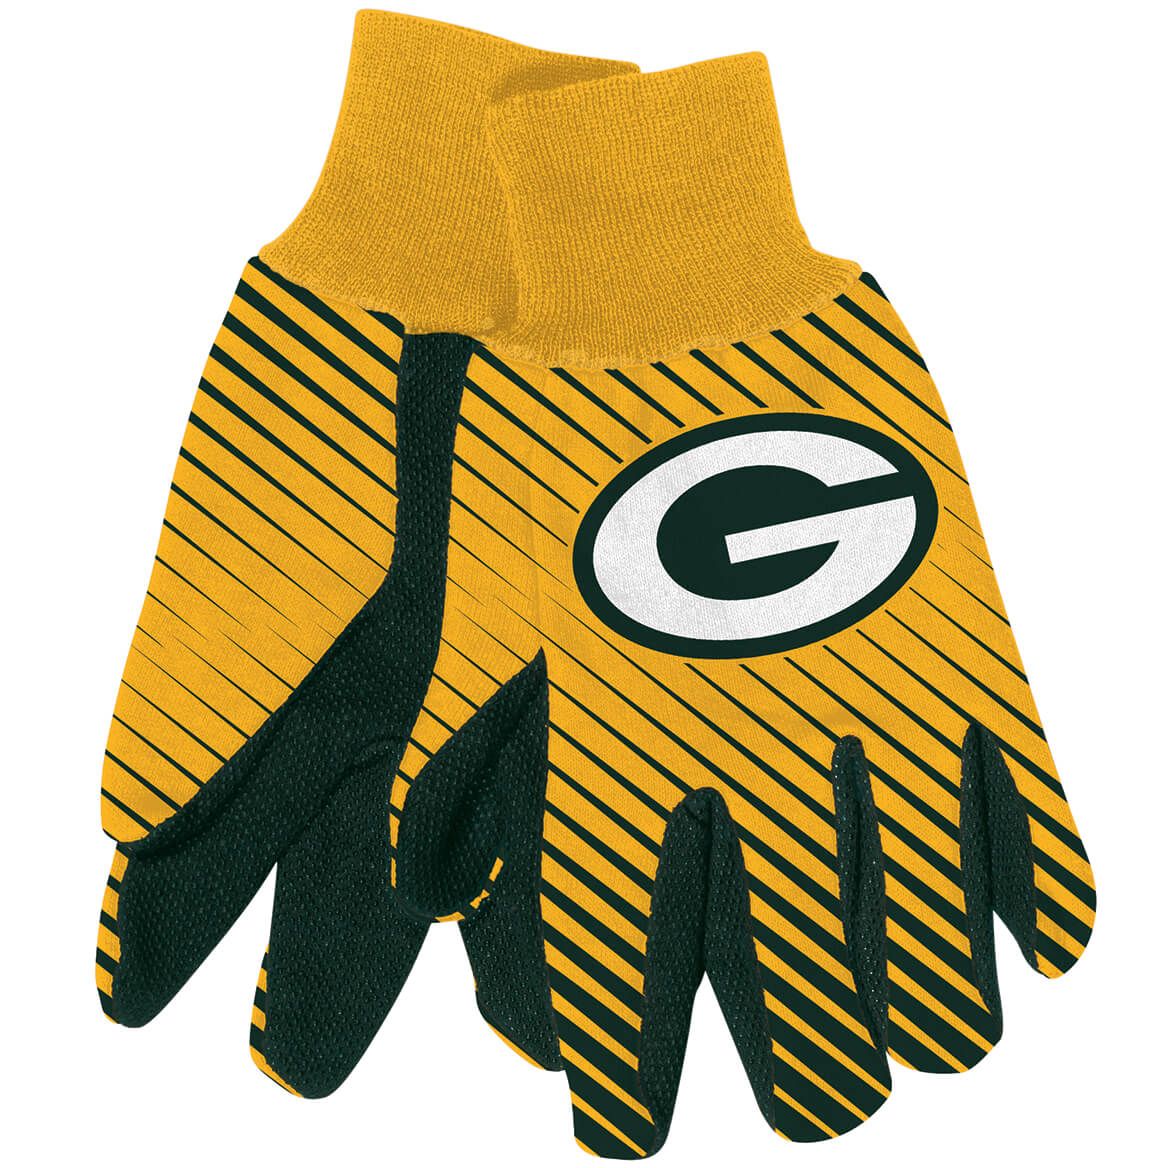 NFL Team Sport Utility Gloves, One Size + '-' + 366100